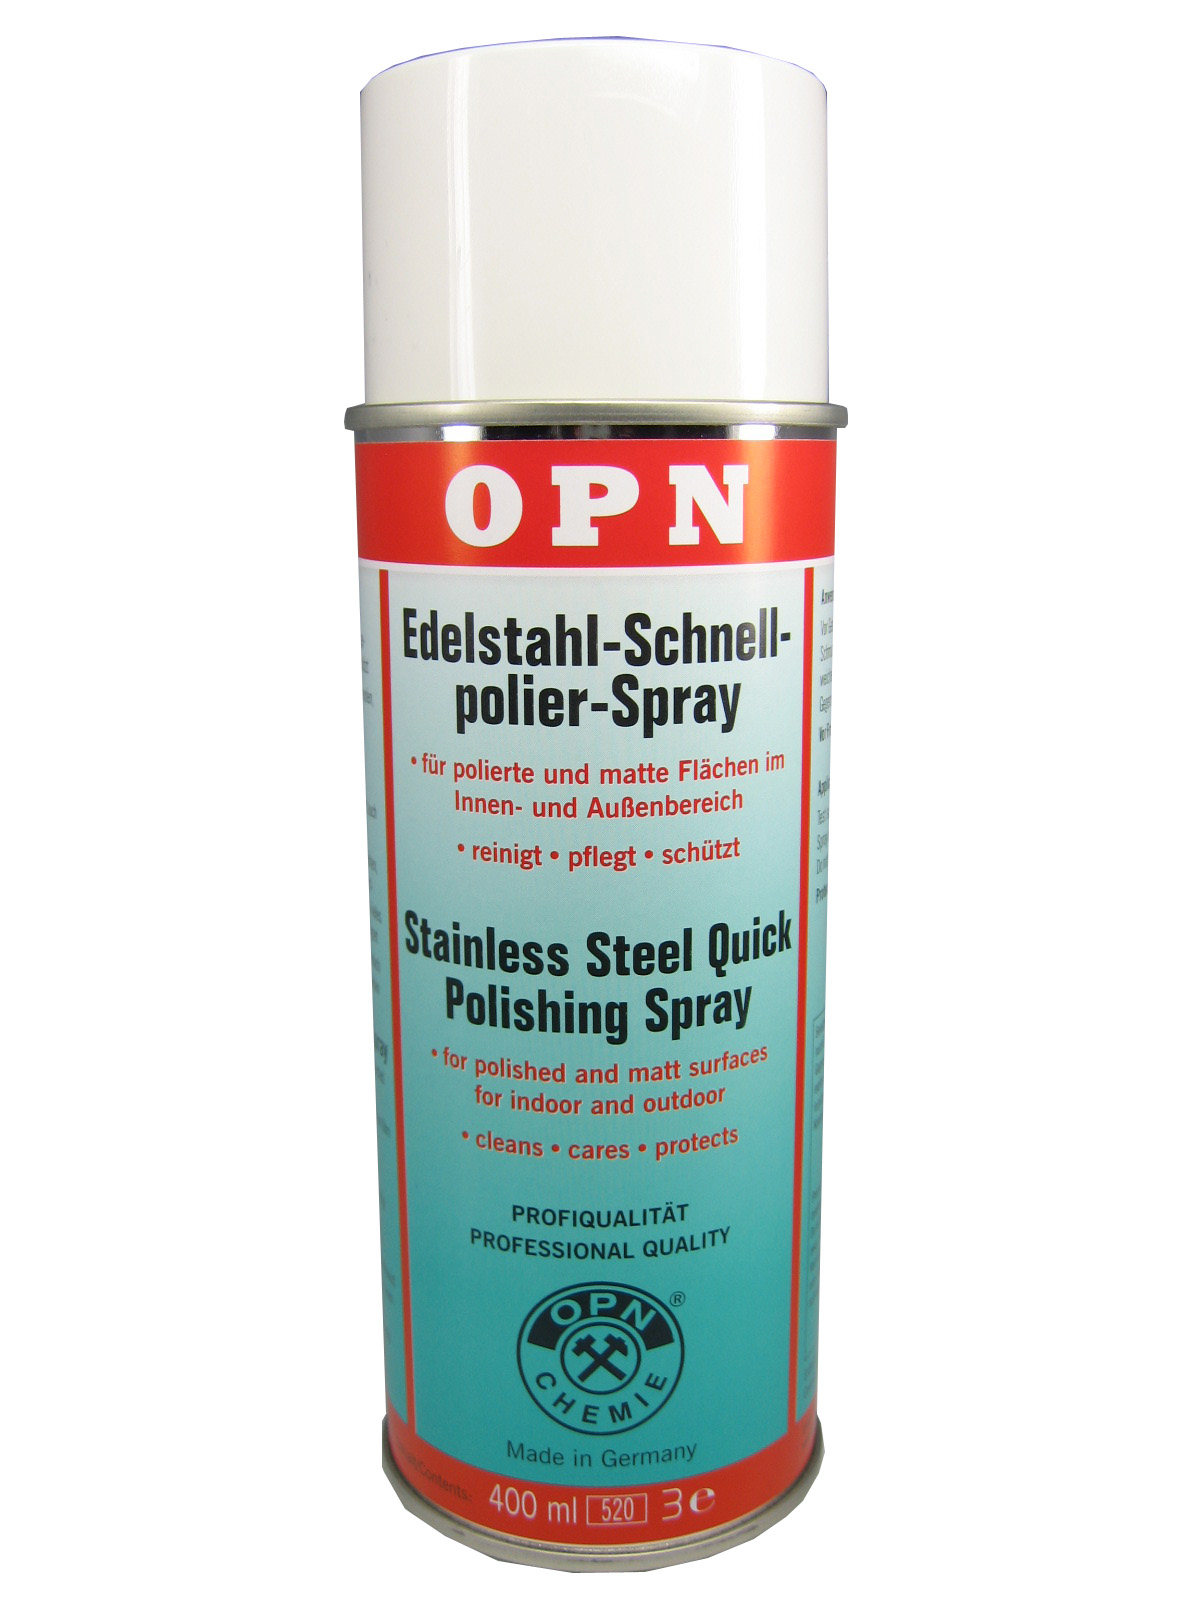 Edelstahl-Schnellpolier-Spray